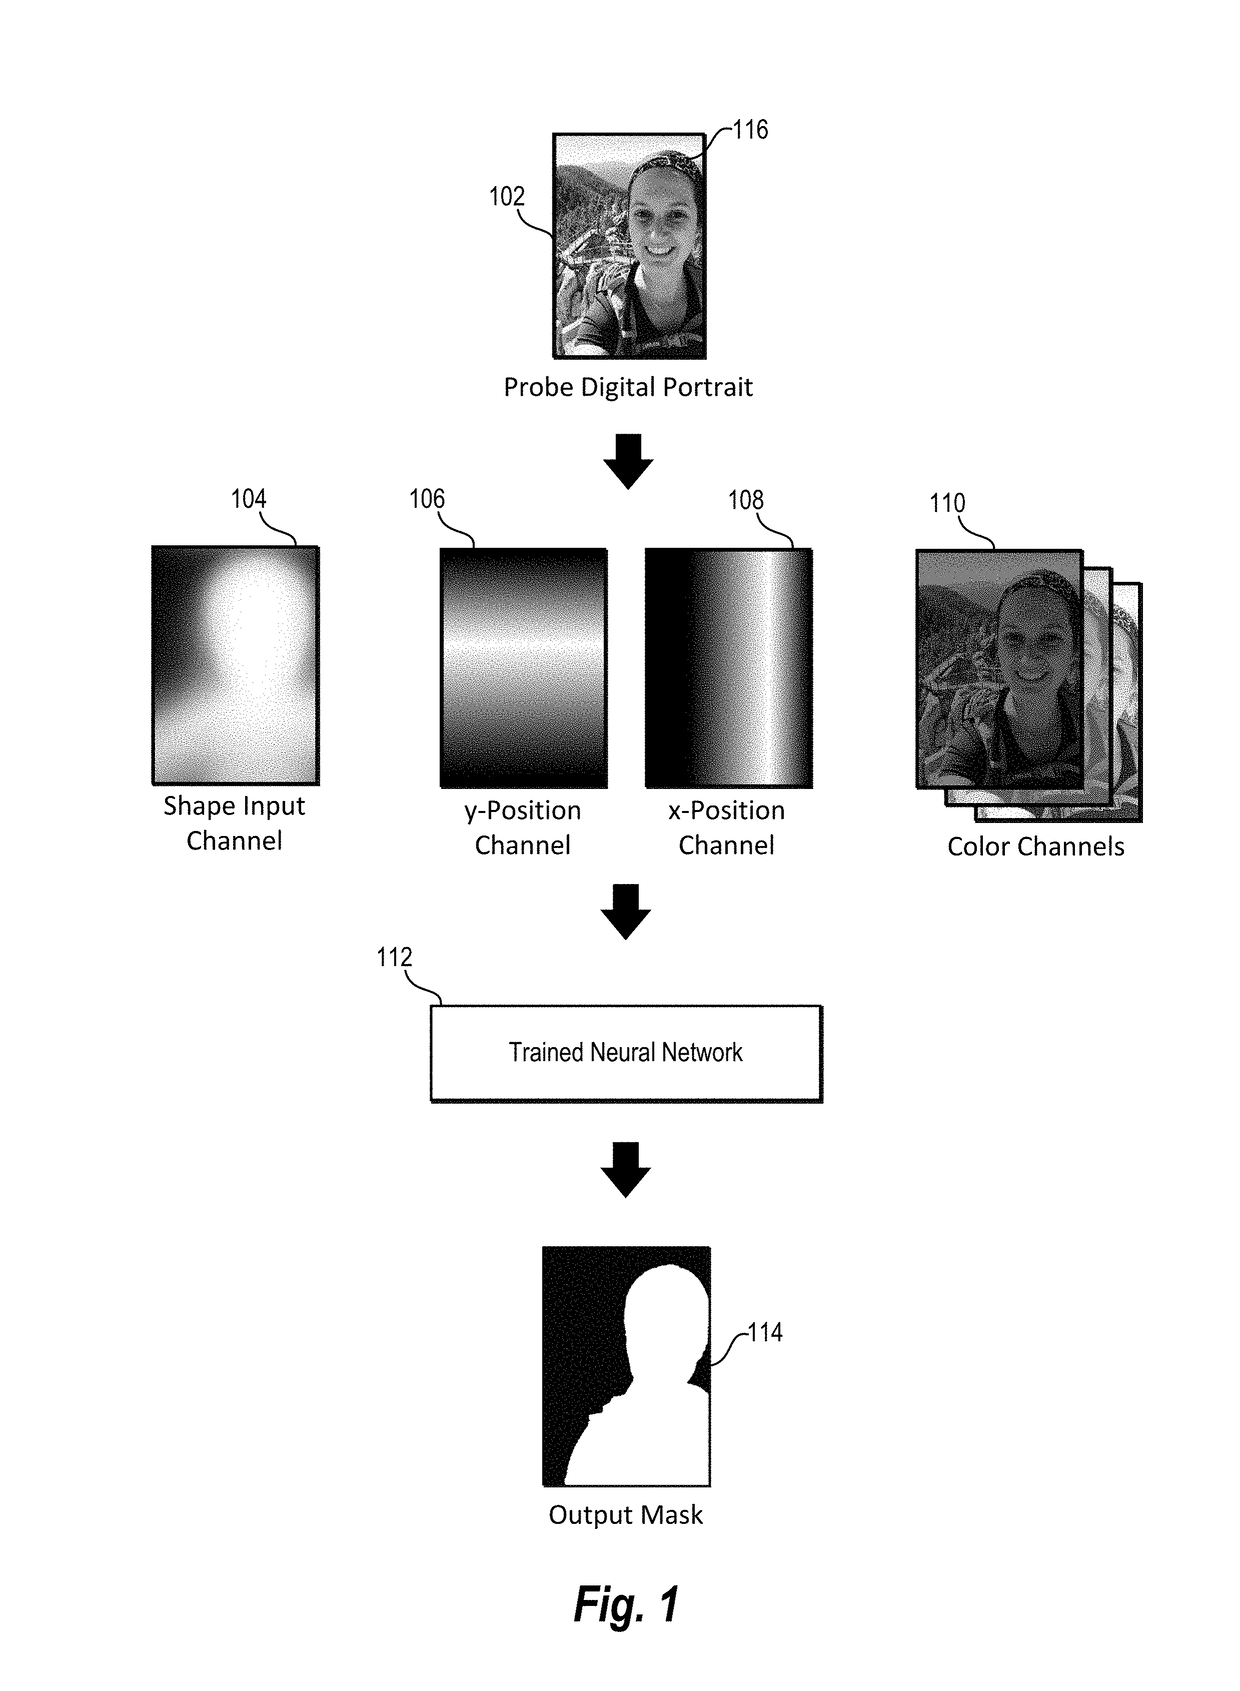 Utilizing deep learning for automatic digital image segmentation and stylization